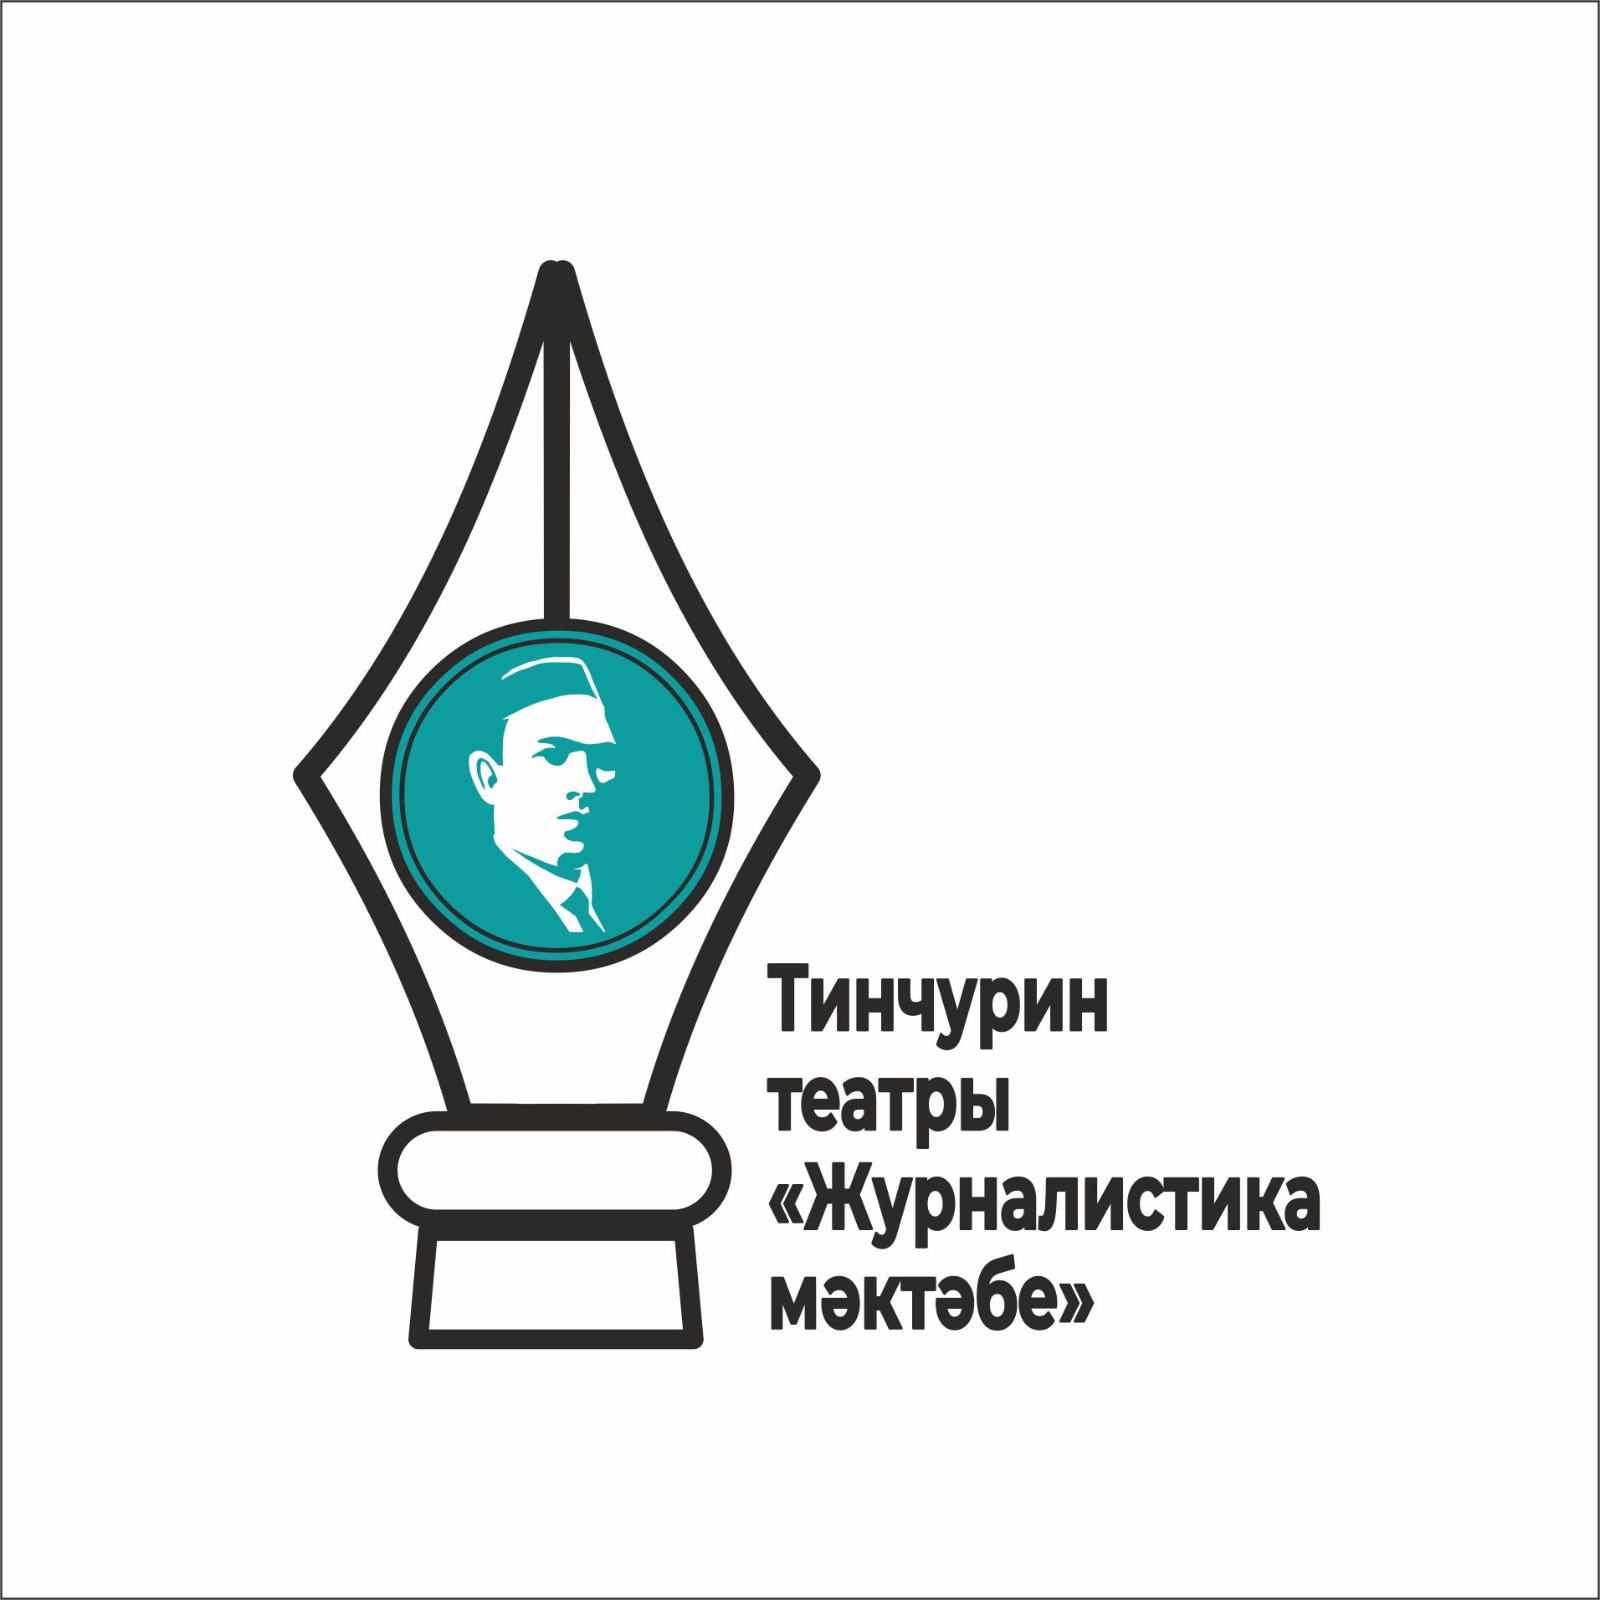 Театр Тинчурина объявляет open-call на участие в «Школе журналистики»